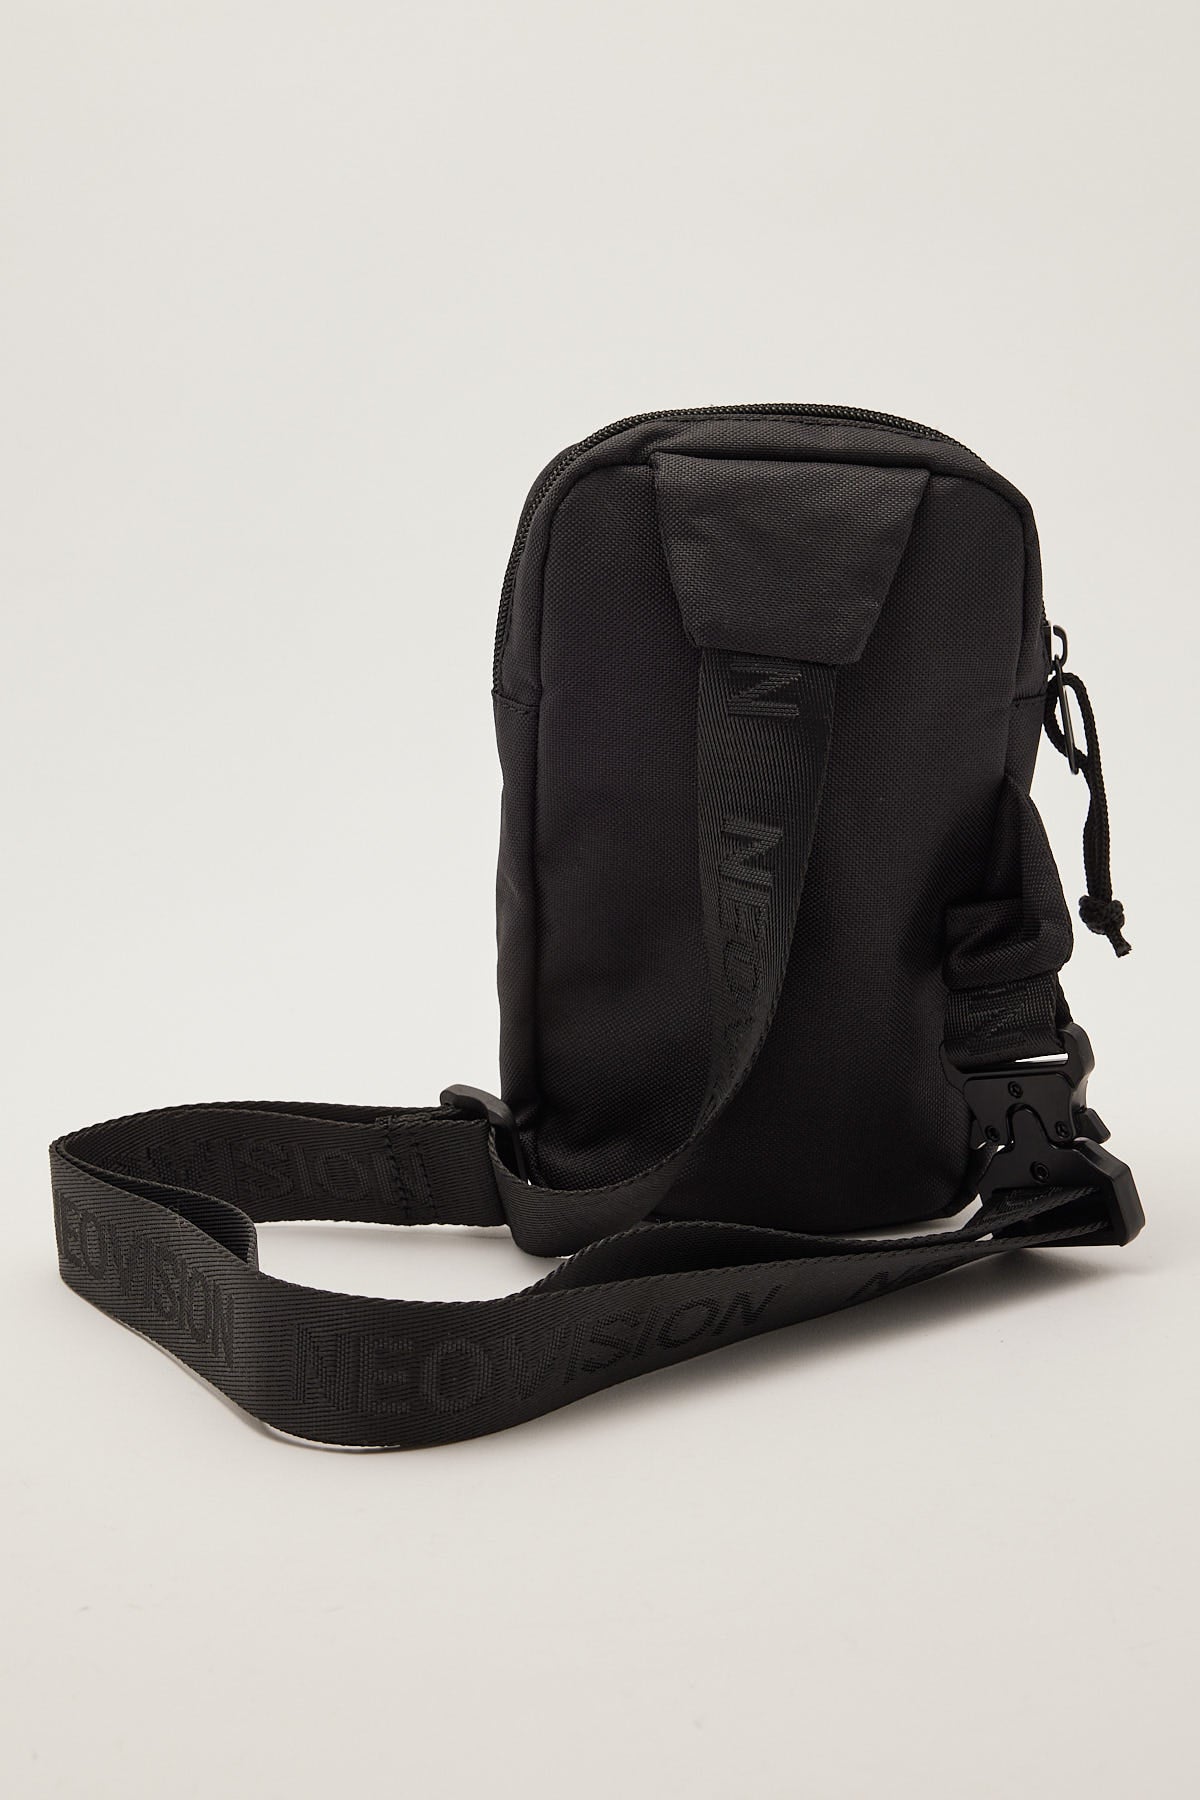 Neovision Ace Clip Crossbody Bag Black